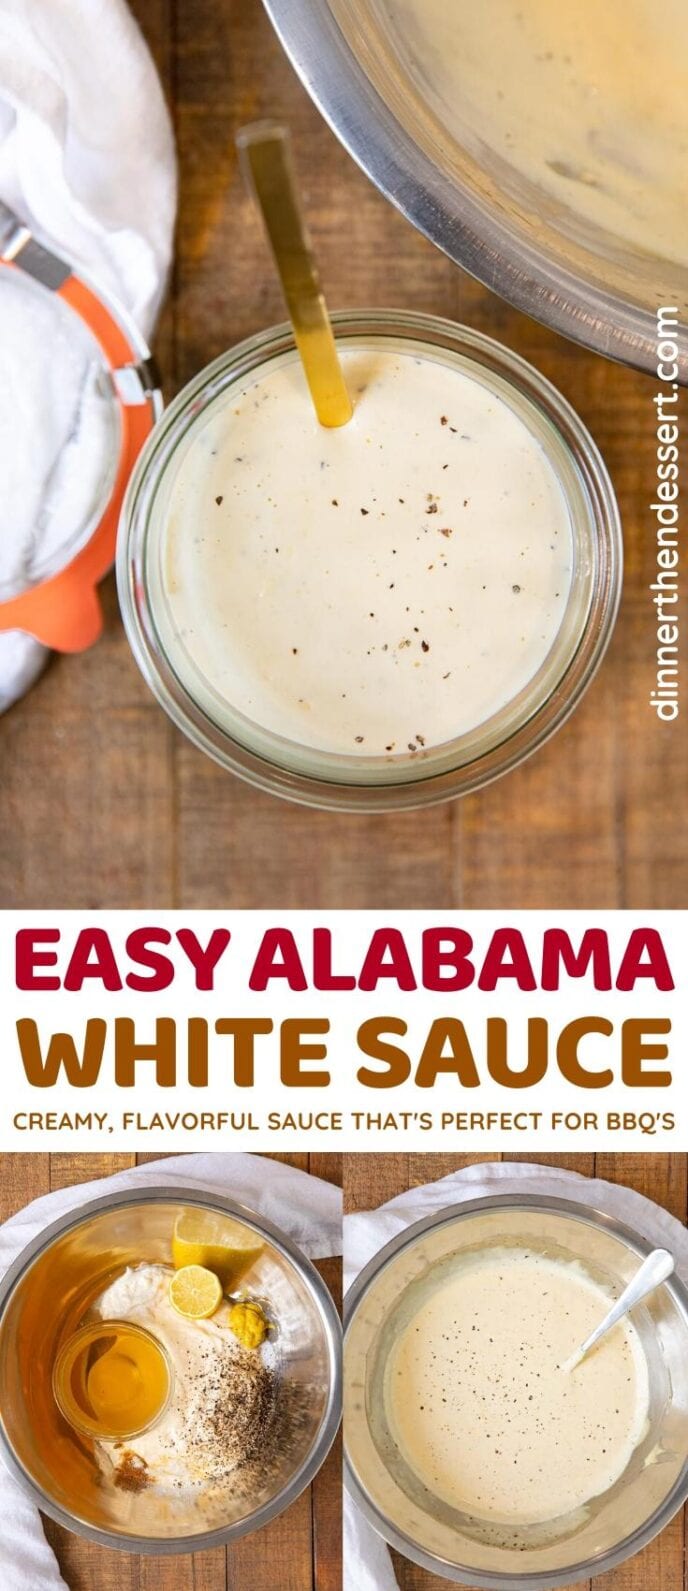 Alabama White Sauce collage